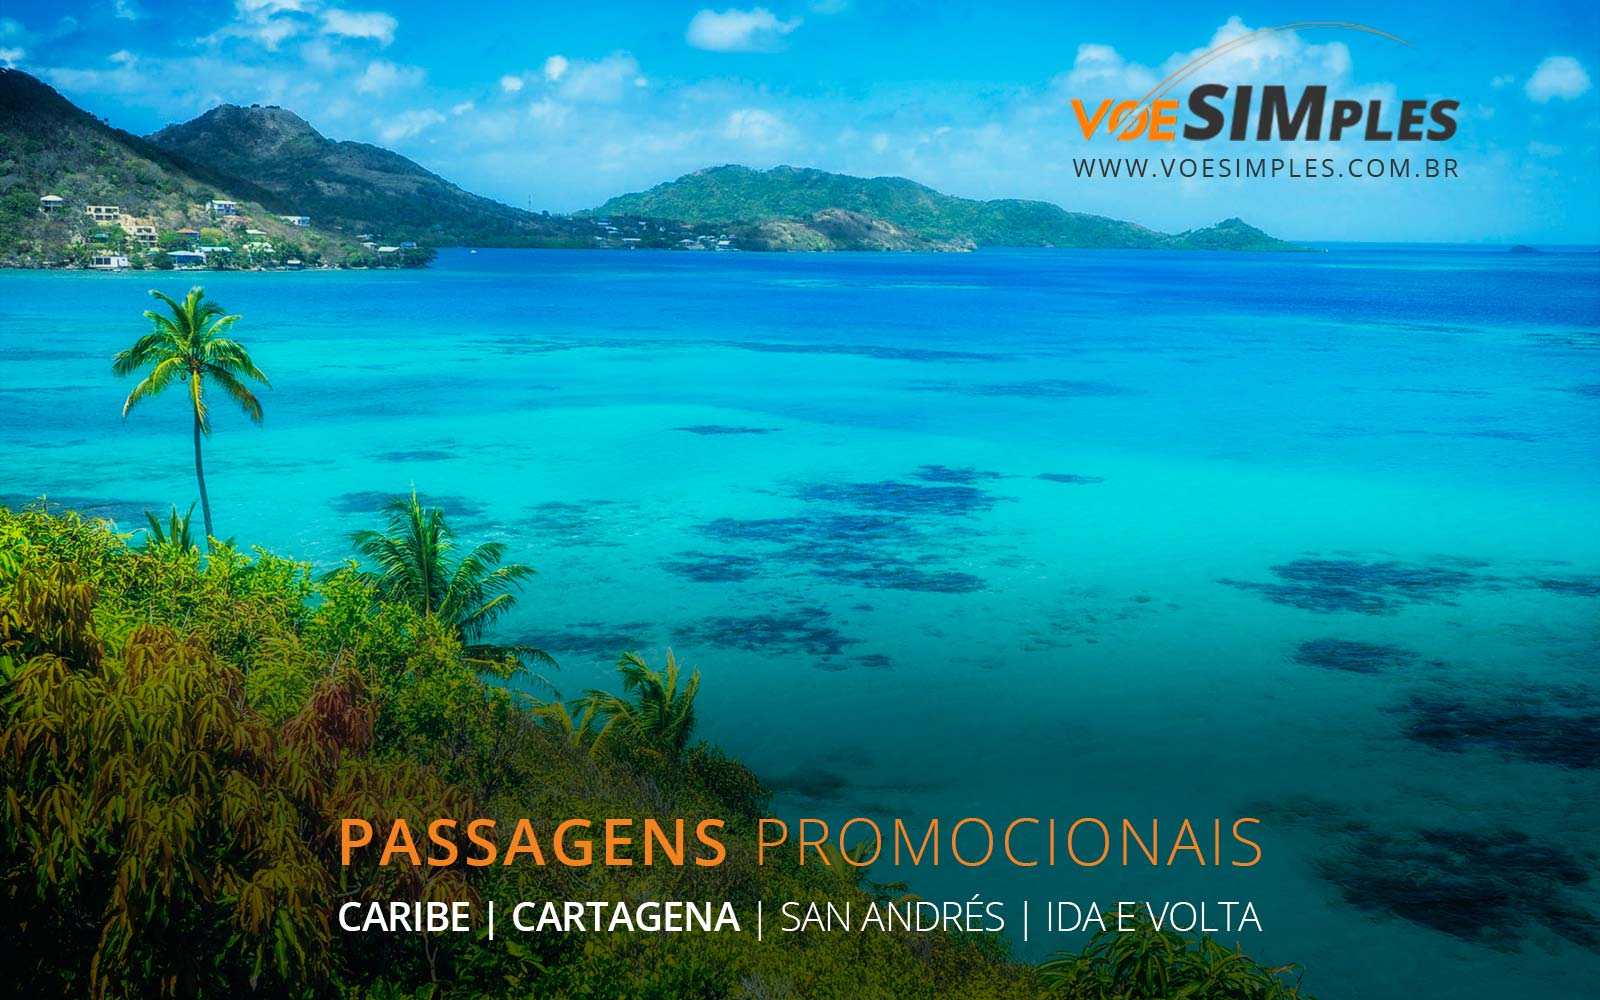 Passagens aéreas baratas para Cartagena e San Andrés no Caribe Colombiano.